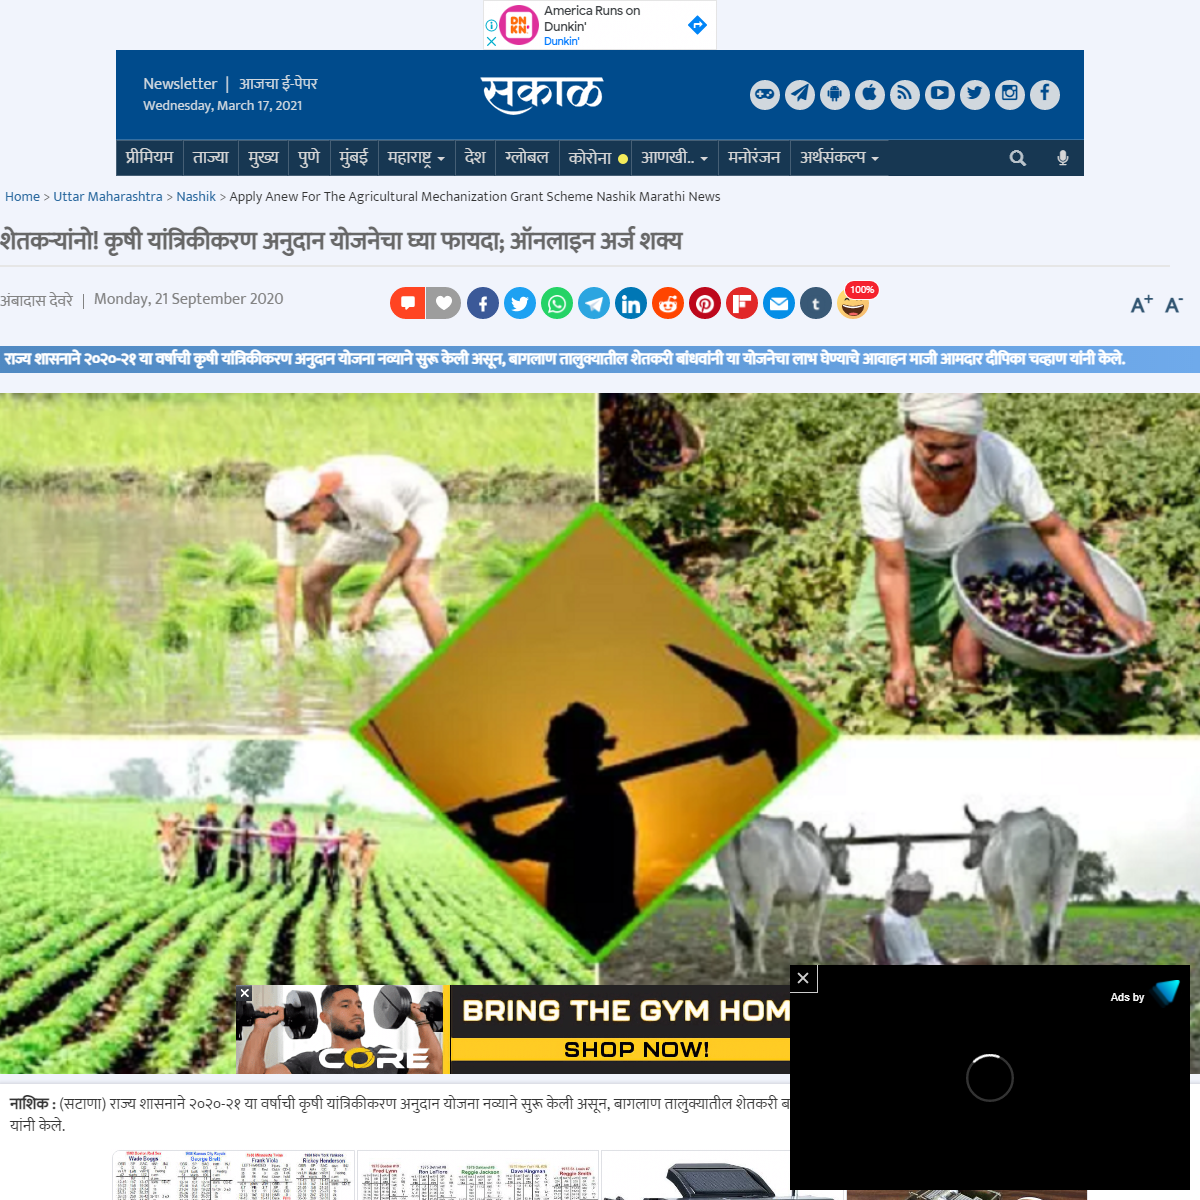 A complete backup of https://www.esakal.com/uttar-maharashtra-news/nashik/apply-anew-agricultural-mechanization-grant-scheme-nas